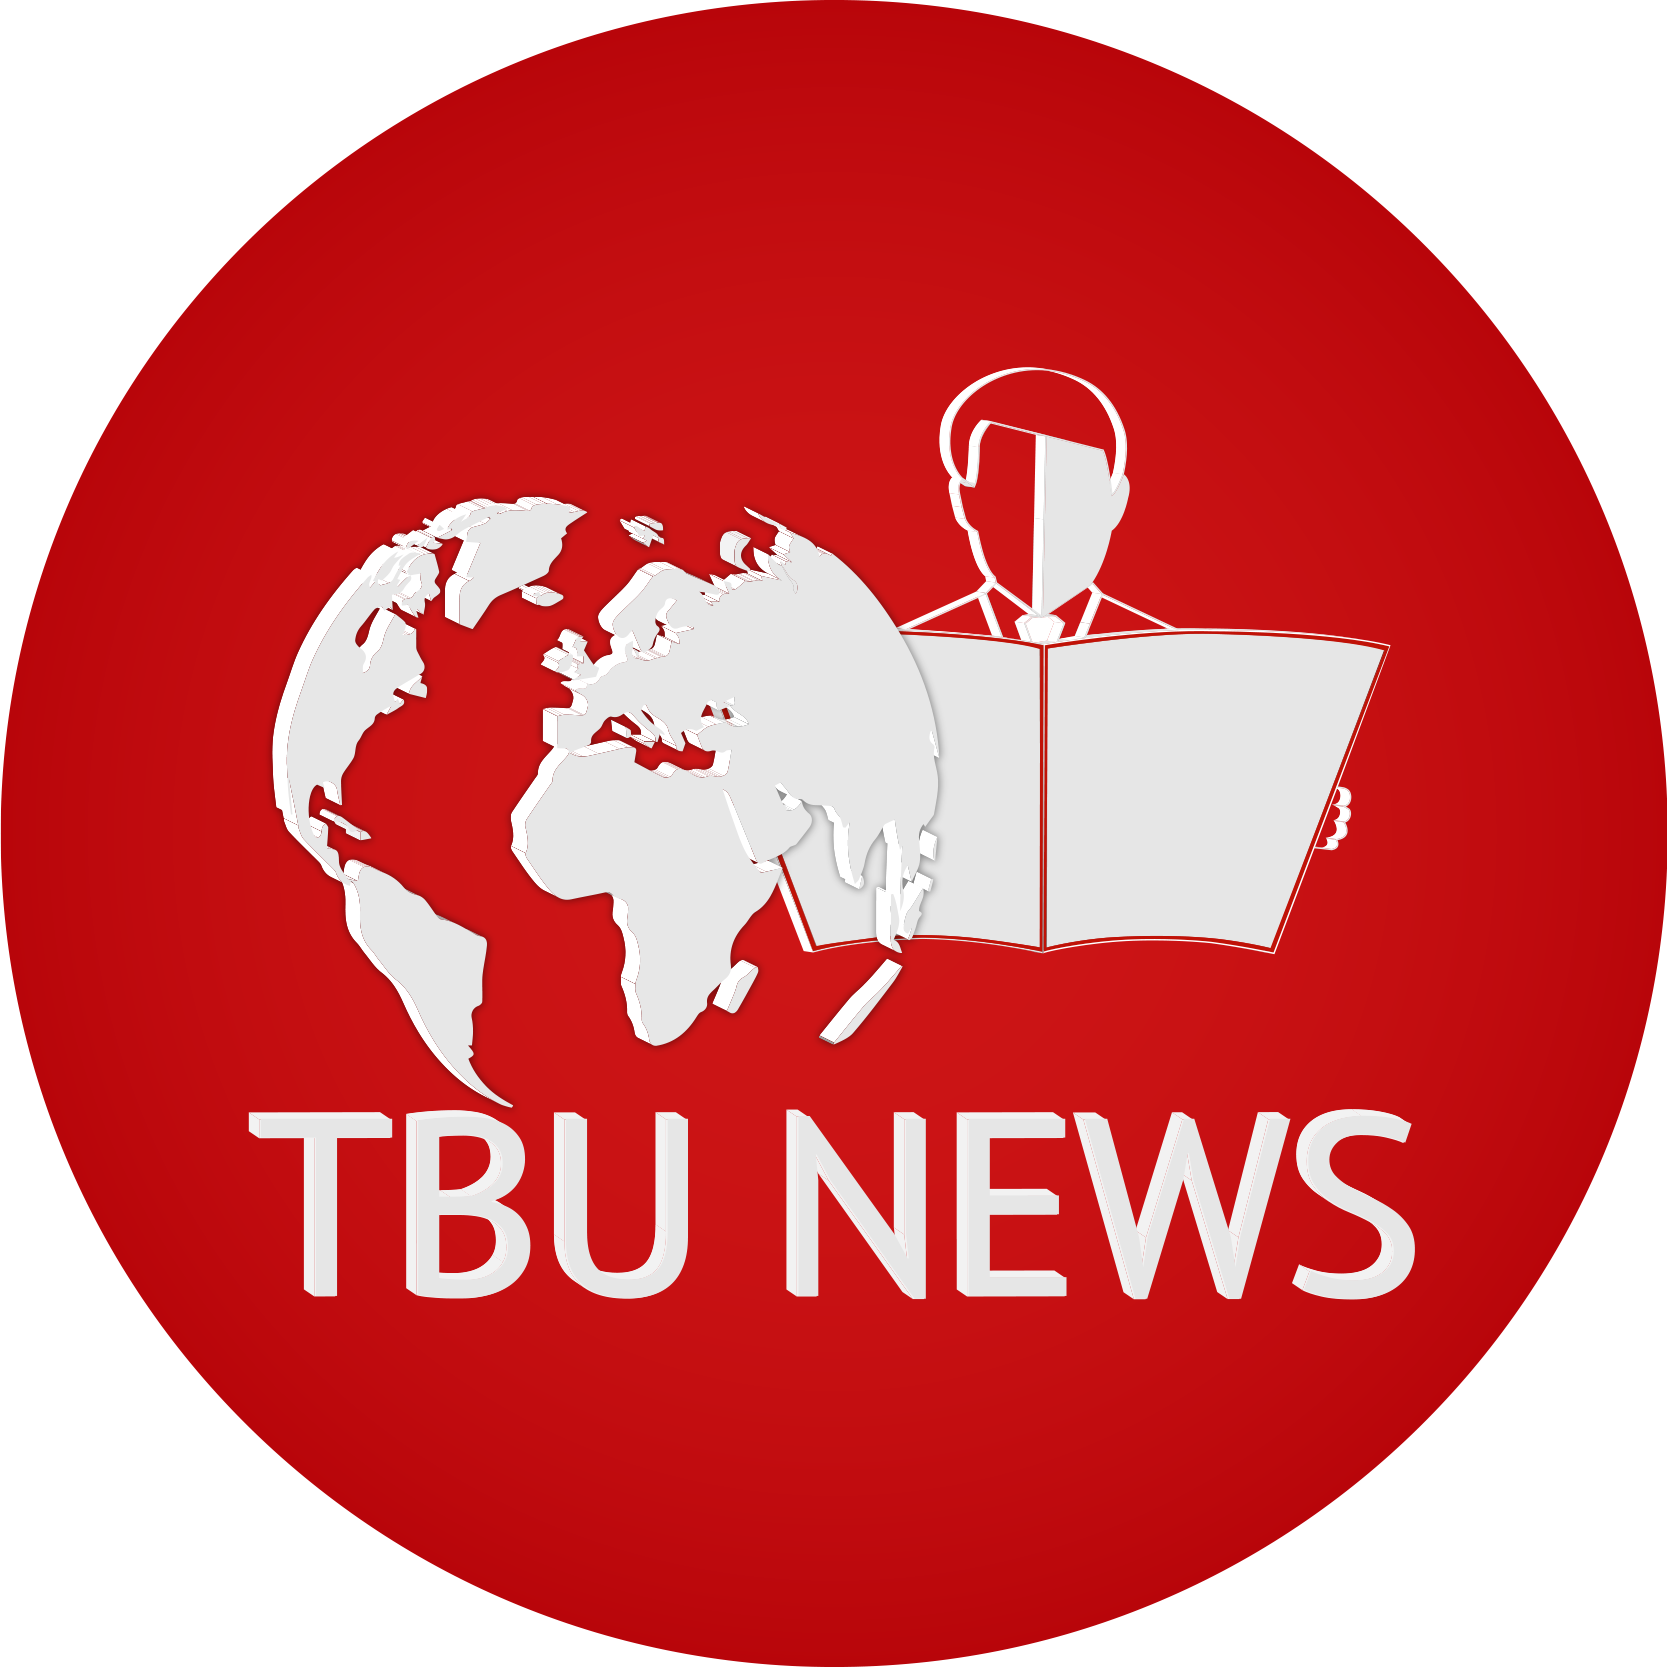 TBU NEWS INFO